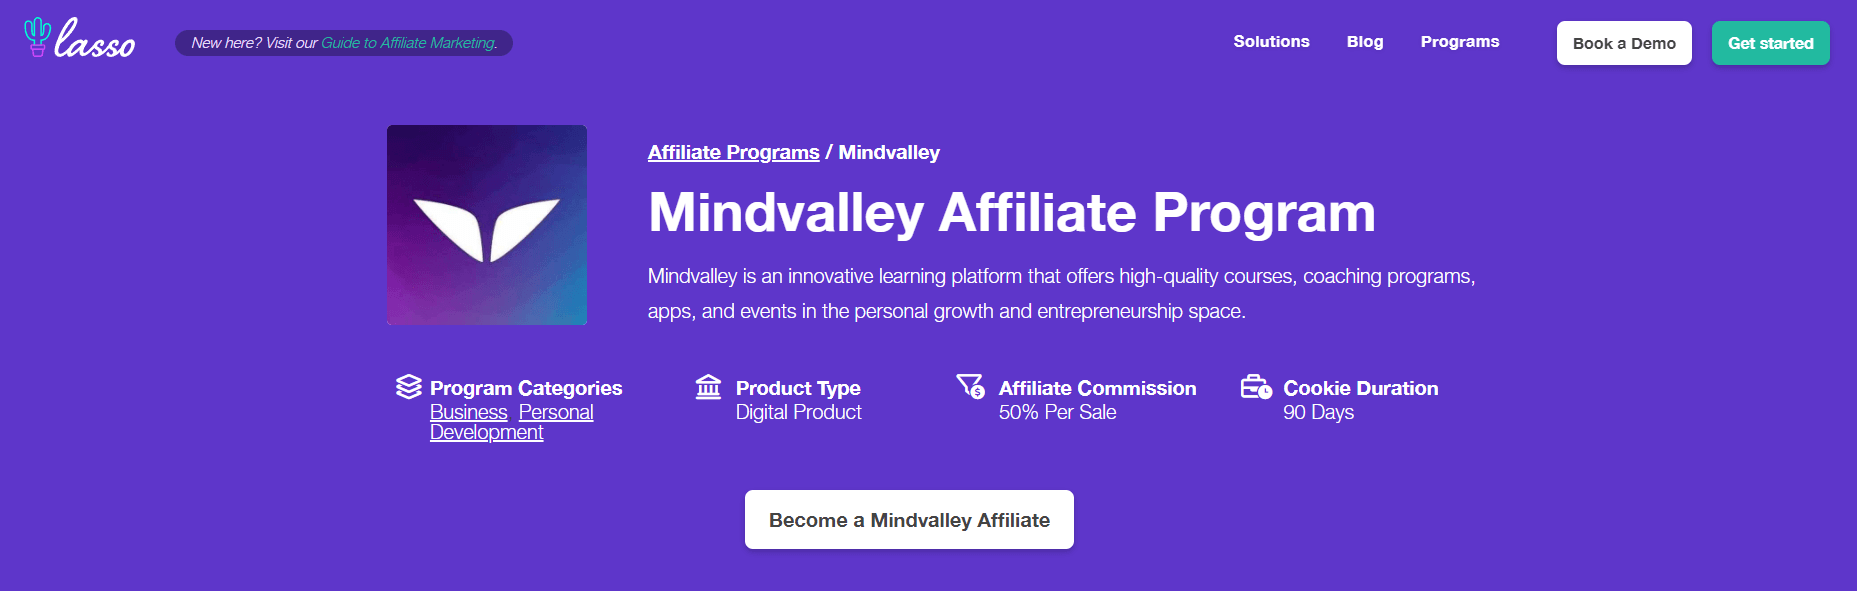 mindvalley affiliate